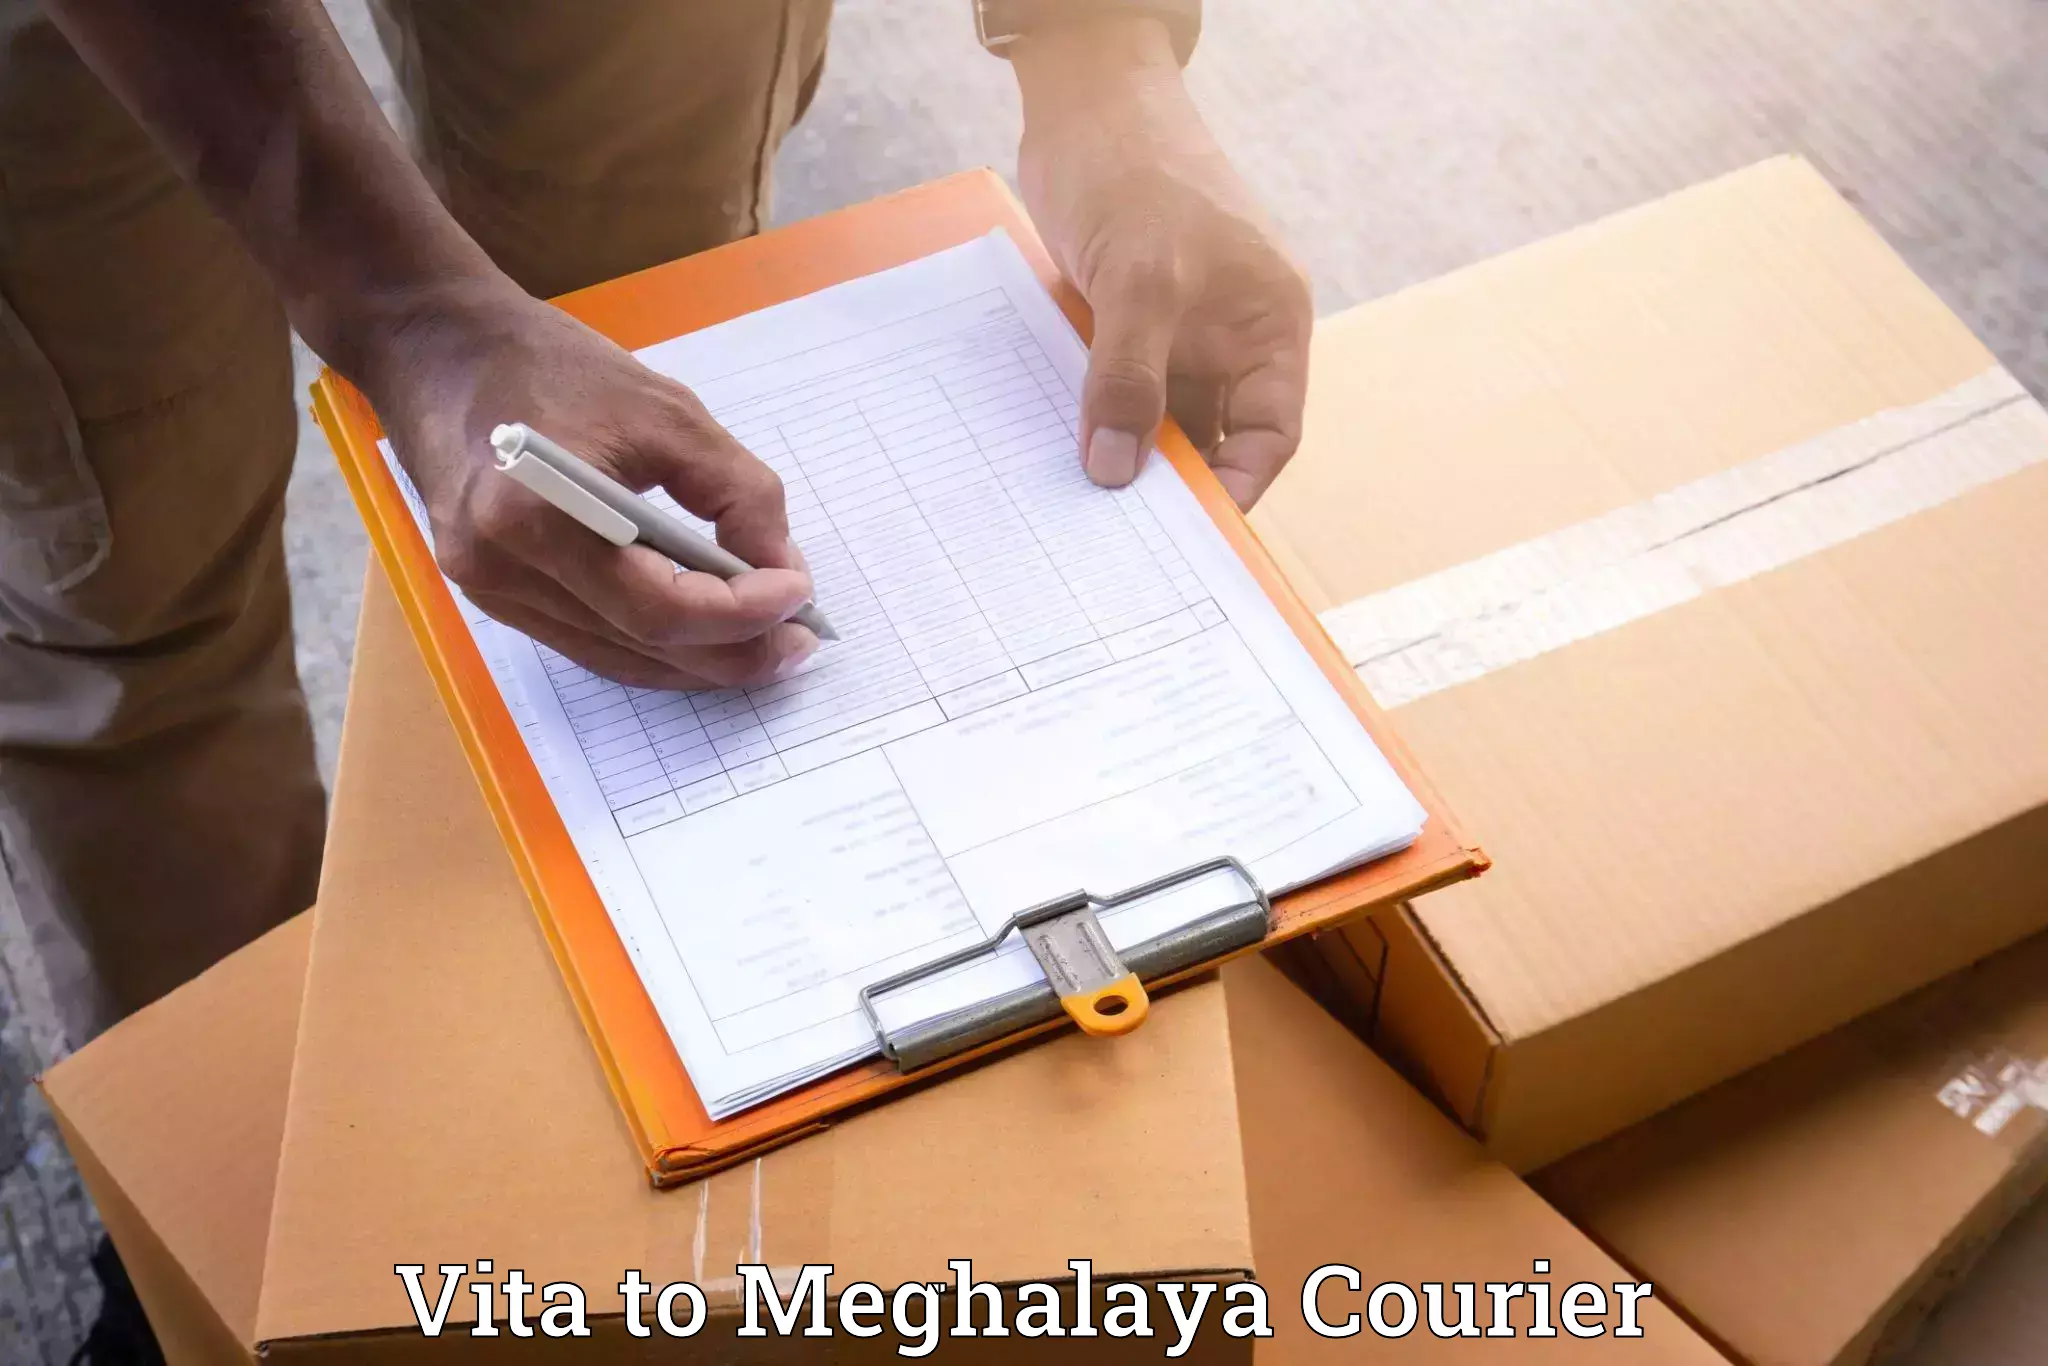 Furniture delivery service Vita to Meghalaya